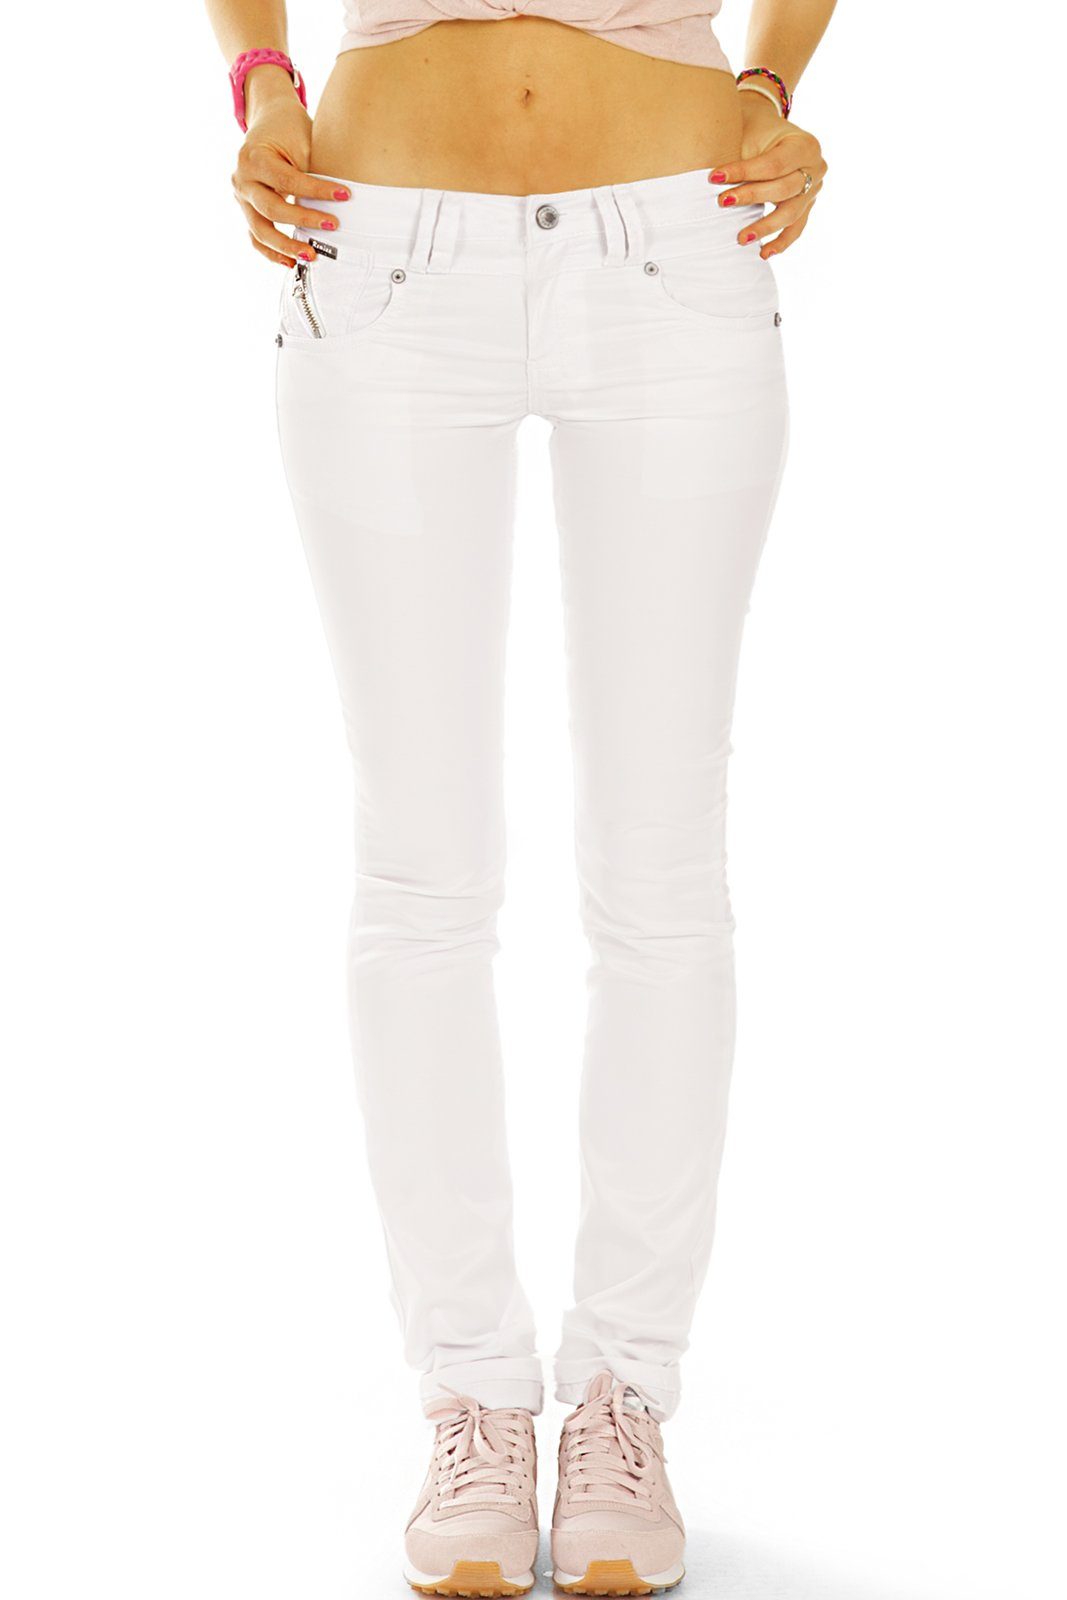 be styled Stoffhose Skinny Röhrenhose Stretch Fit in weiß low waist Jeans-  Damen - j3k-1 unifarben